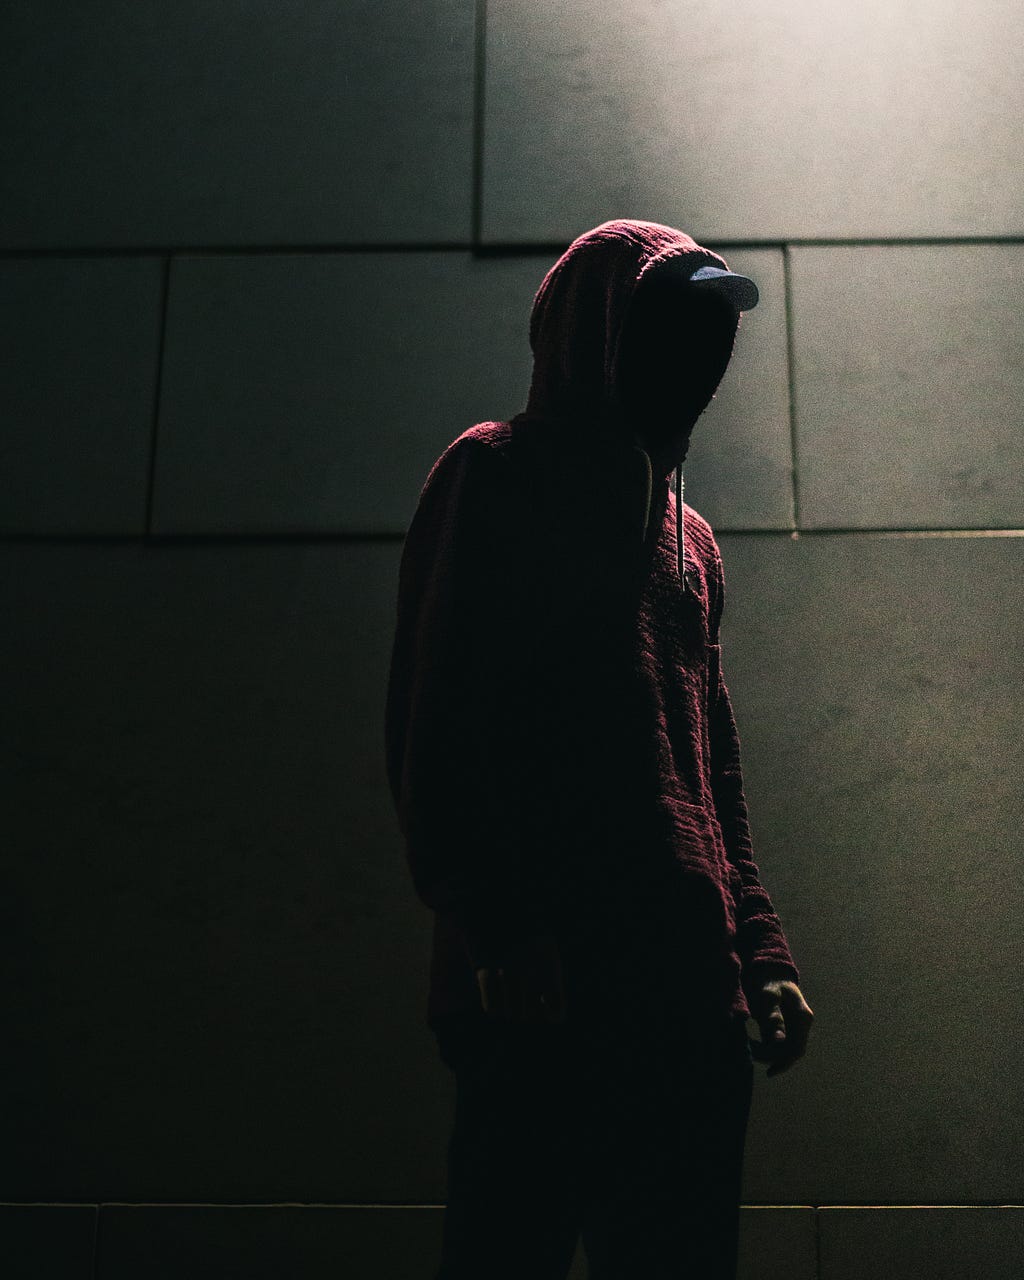 Hooded figure in a dark alleway.